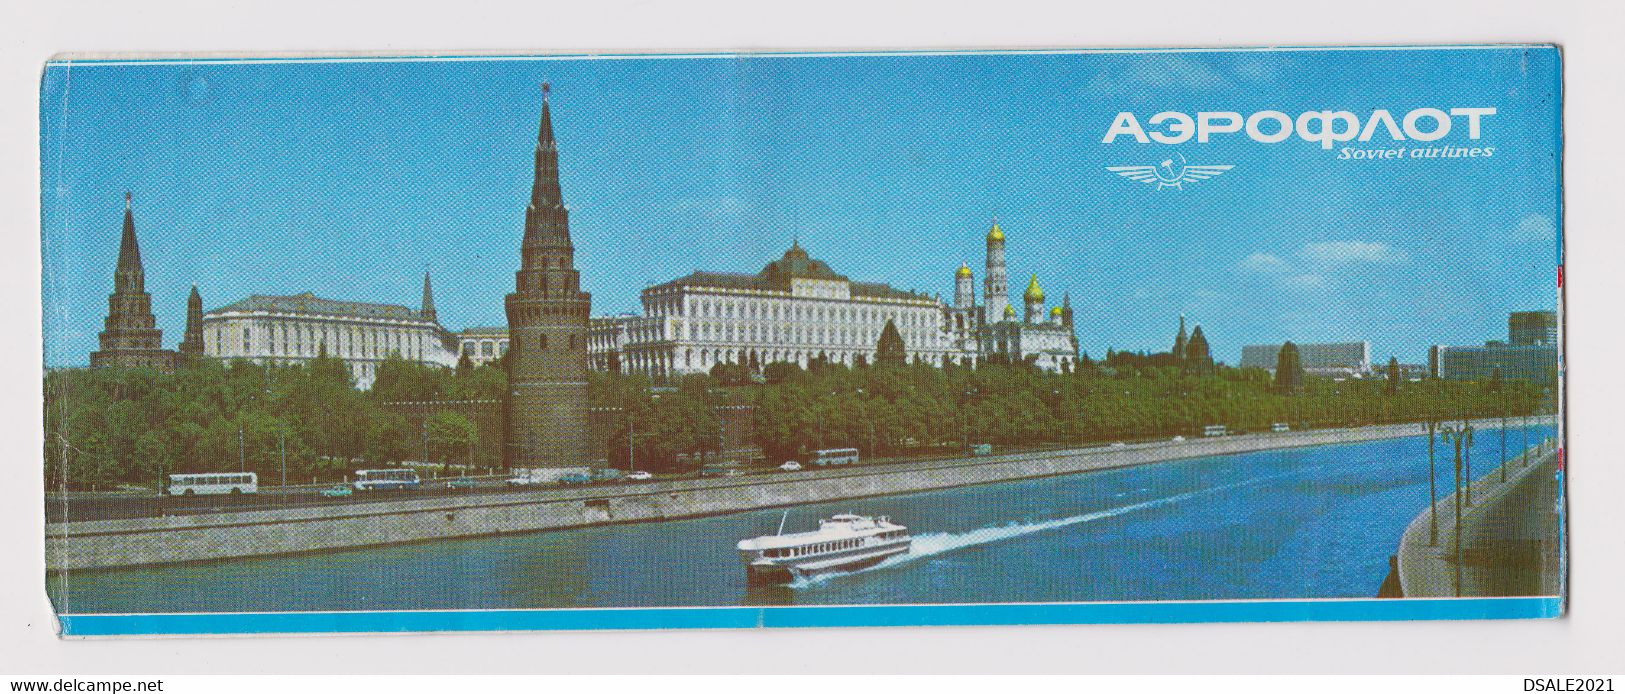 USSR Russia Soviet Union Airlines Airline AEROFLOT Vintage Passenger Ticket 1984 Used (49187) - Tickets